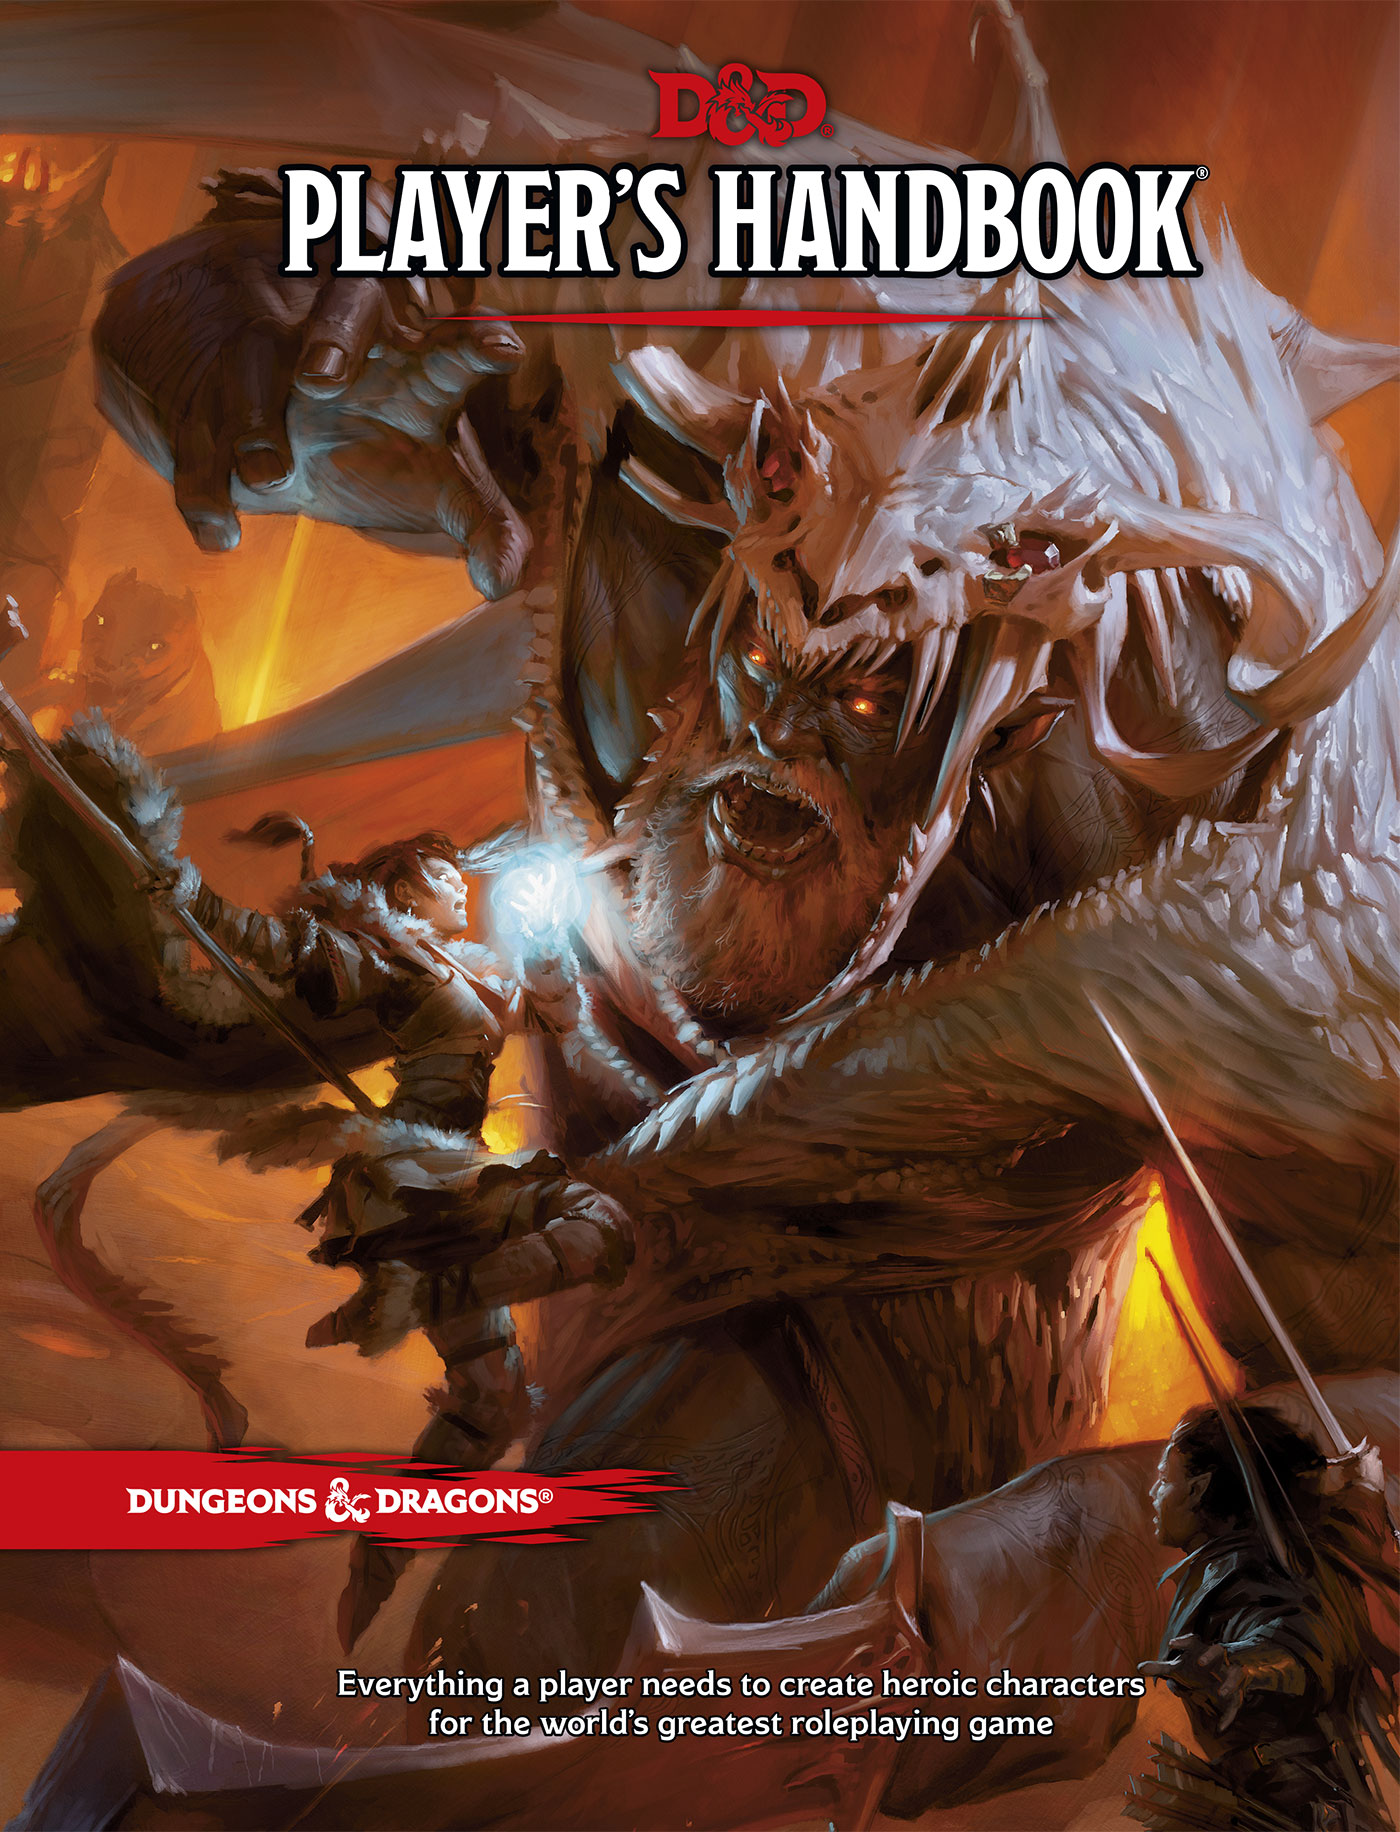 D&D Player's Handbook (Image: Wizards of the Coast)